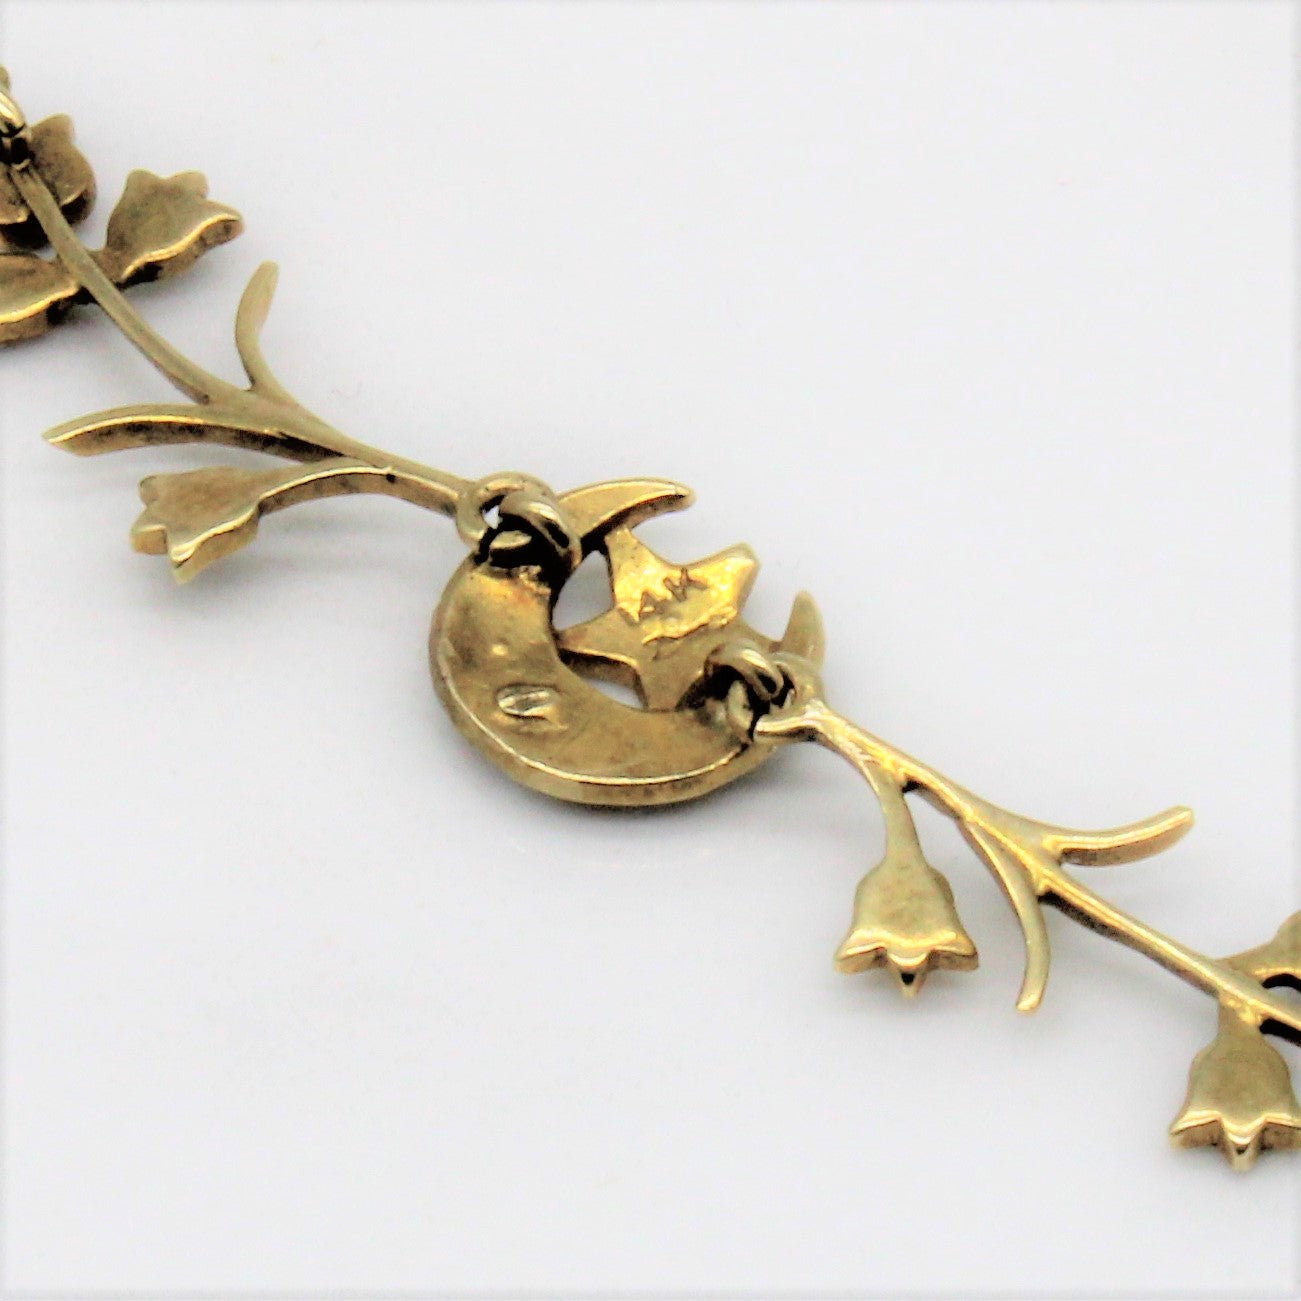 Art Nouveau Floral Seed Pearl Necklace | 16